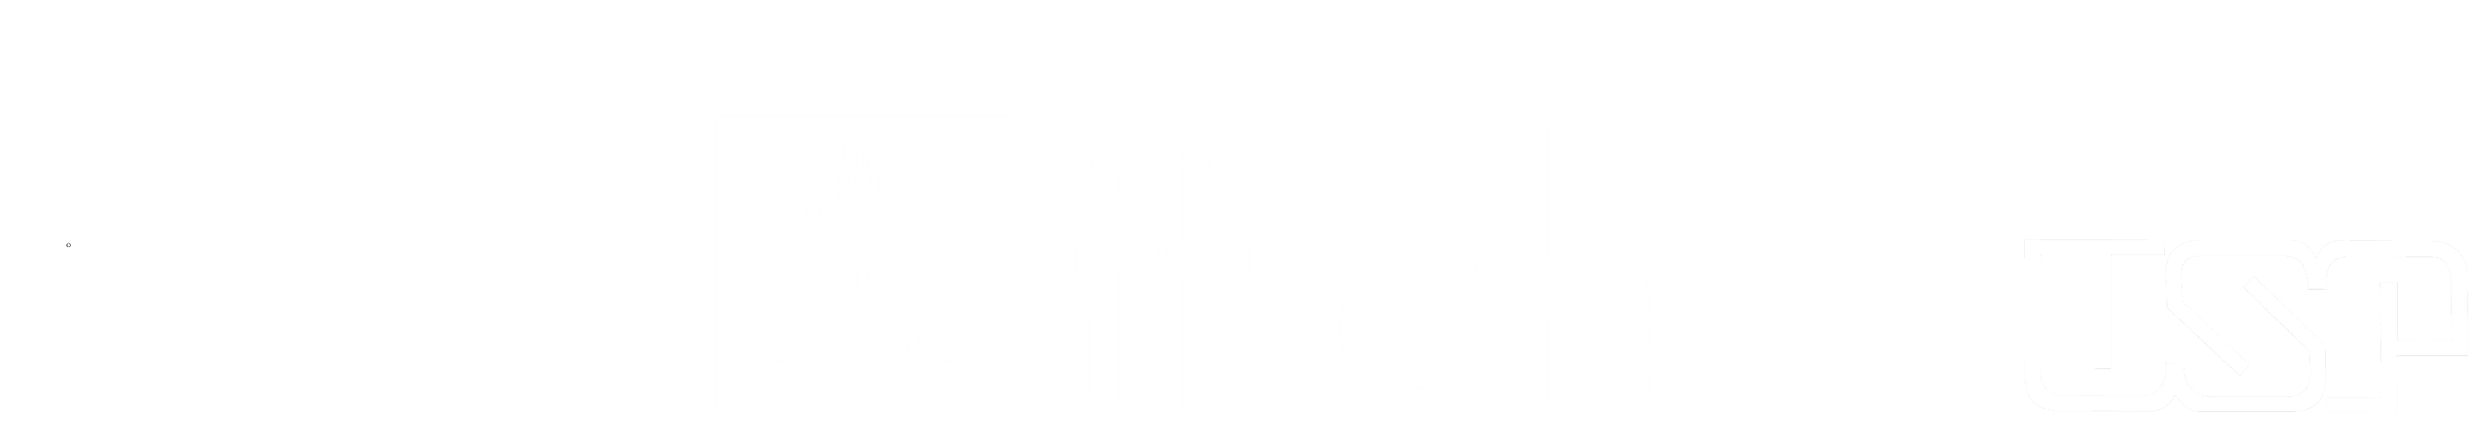 Logos juntos - FLP, FFLCH e USP